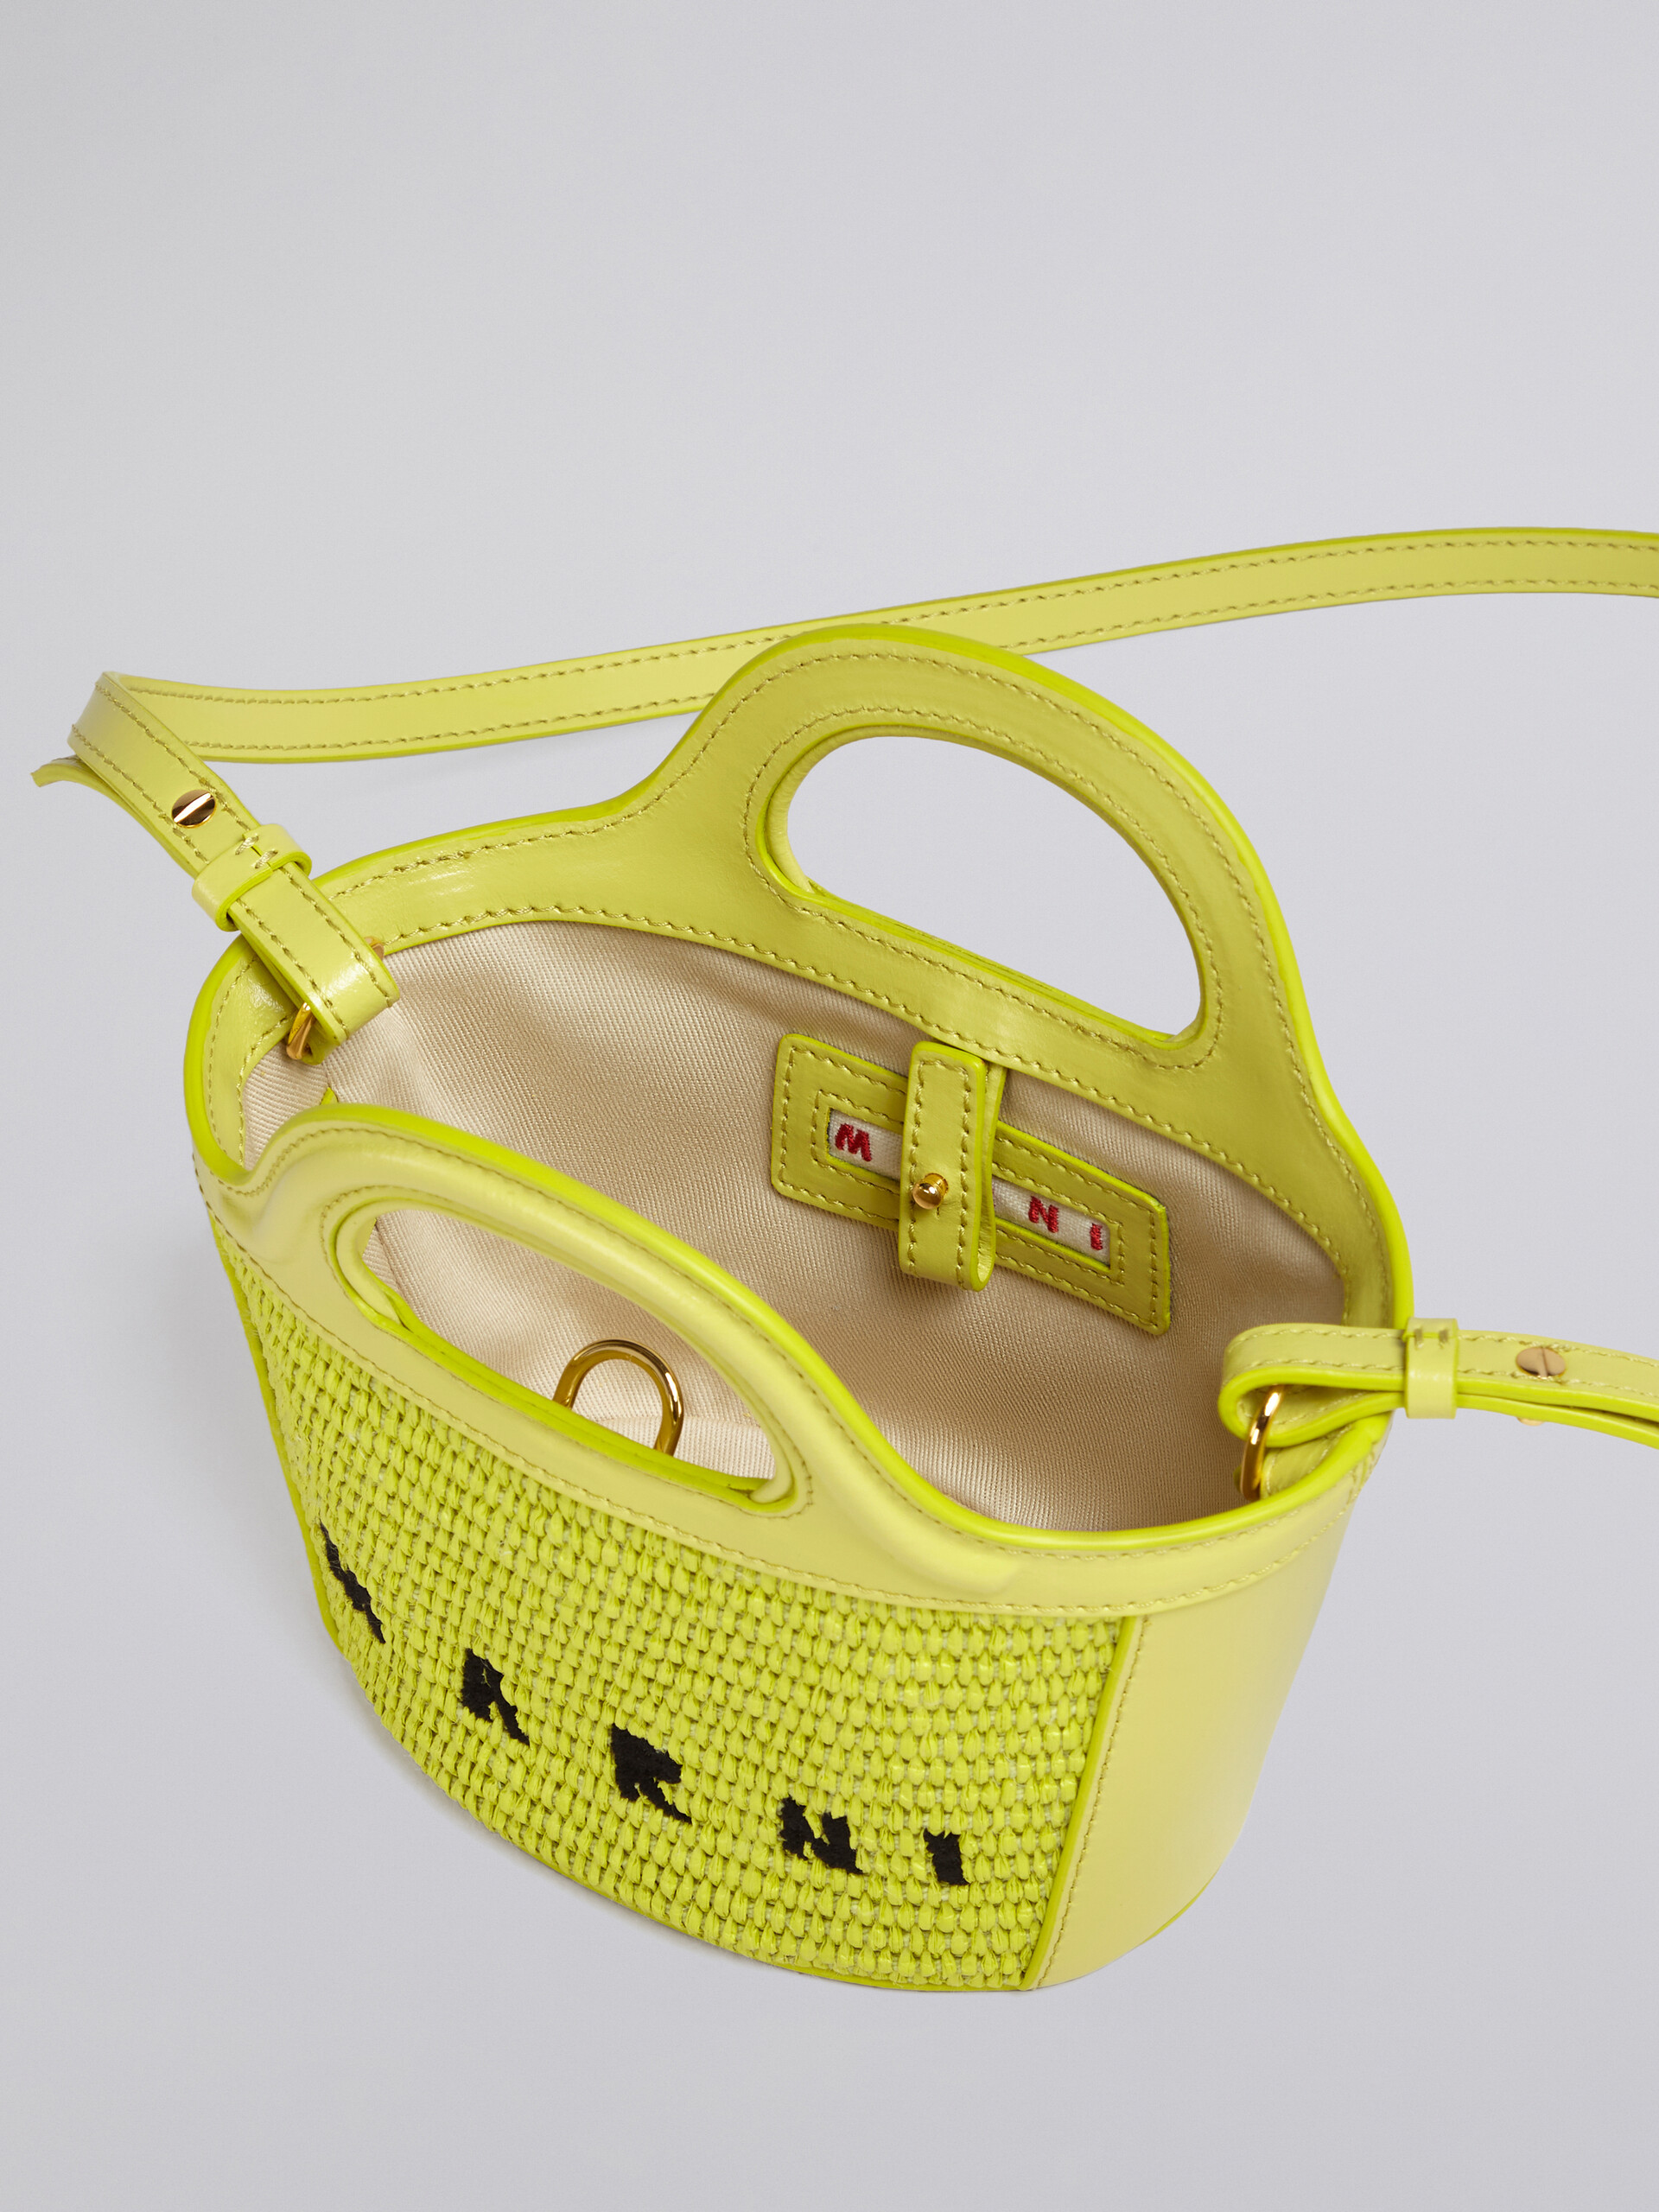 TROPICALIA micro bag in yellow leather and raffia - Handbags - Image 4